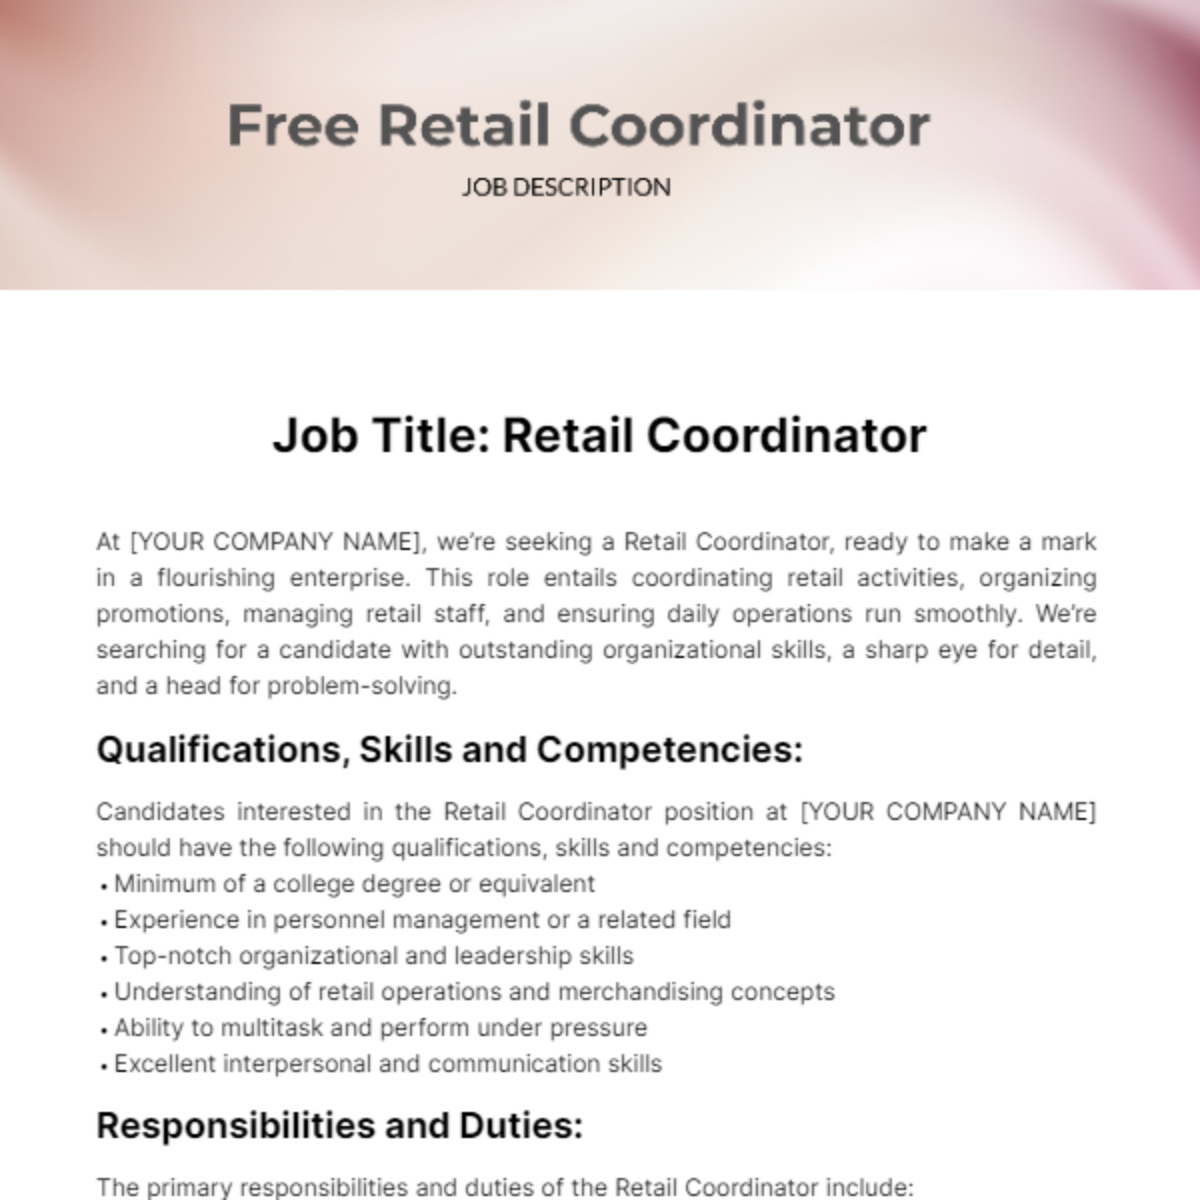 Free Retail Coordinator Job Description Template